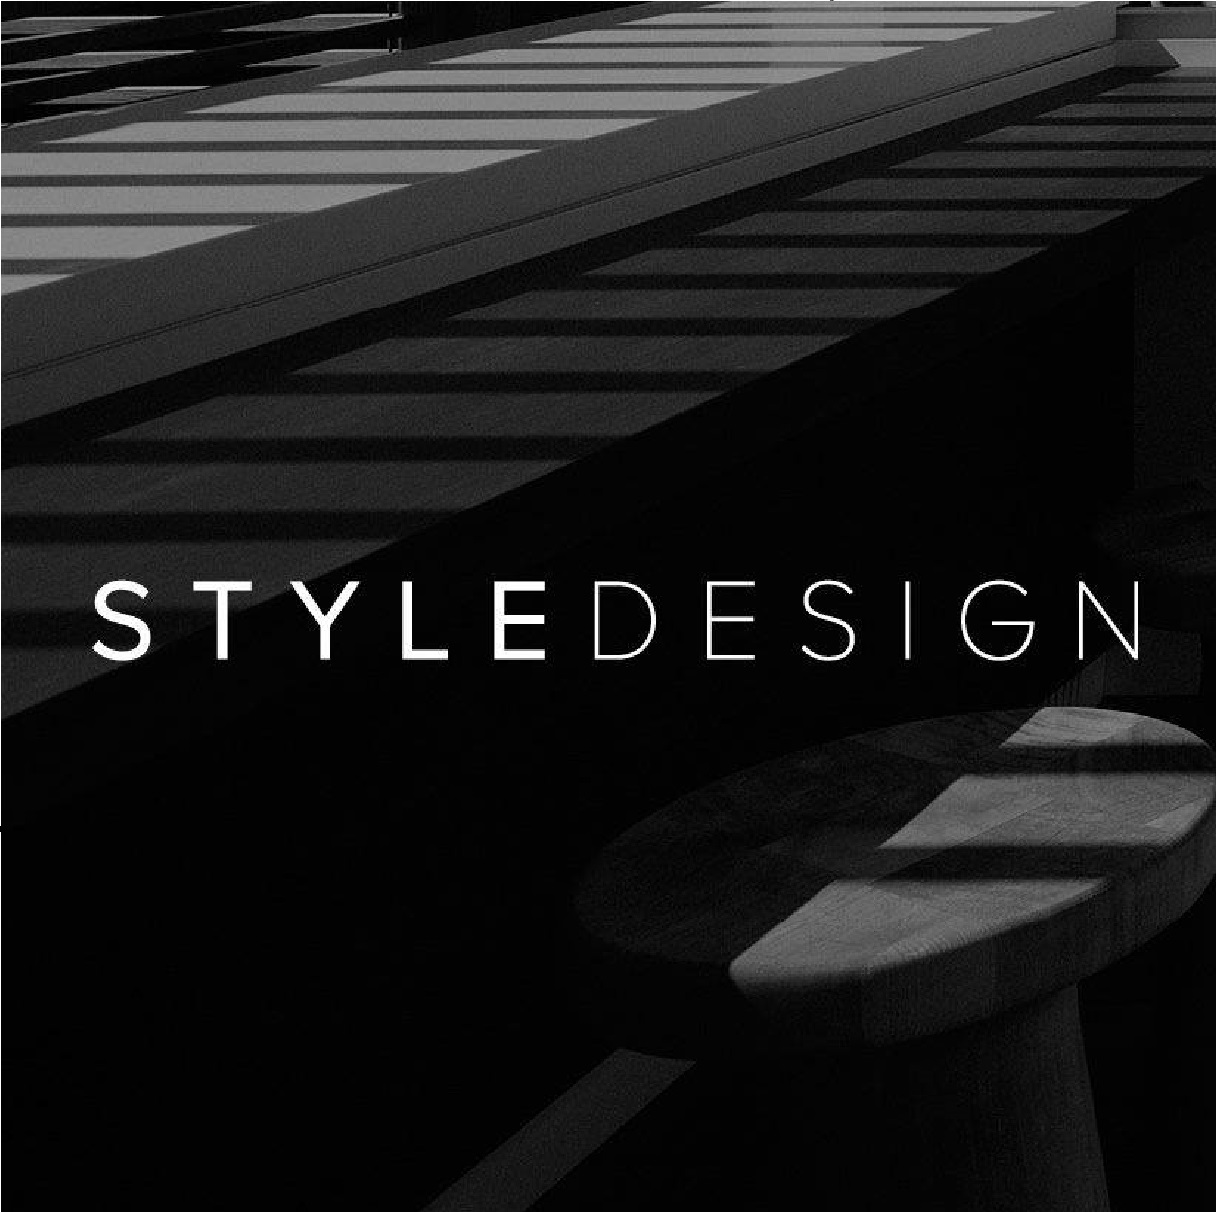 Style Design company